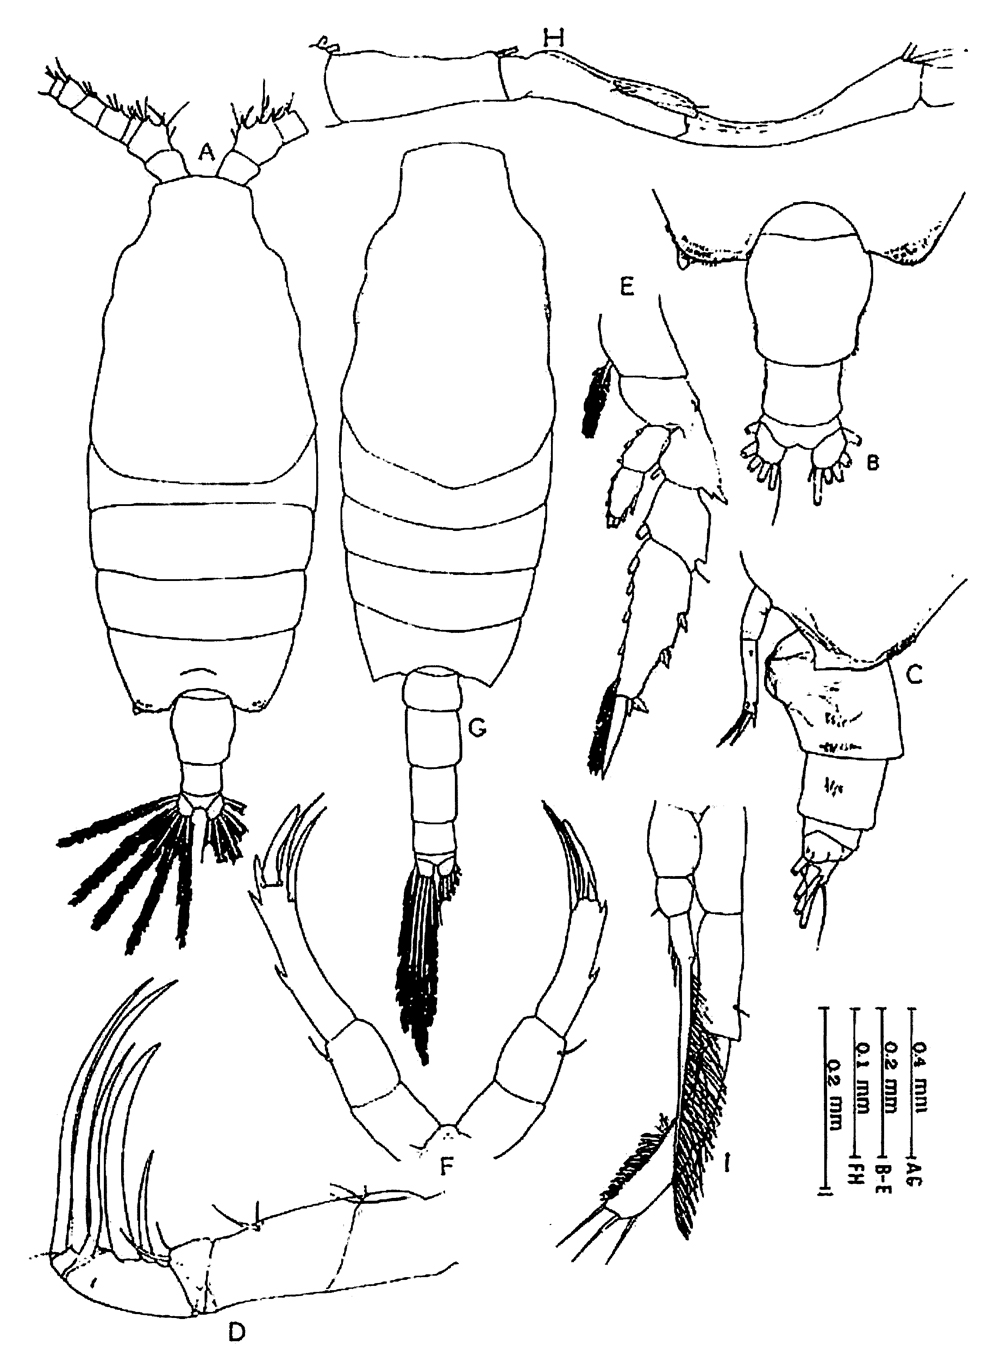 Species Candacia truncata - Plate 10 of morphological figures